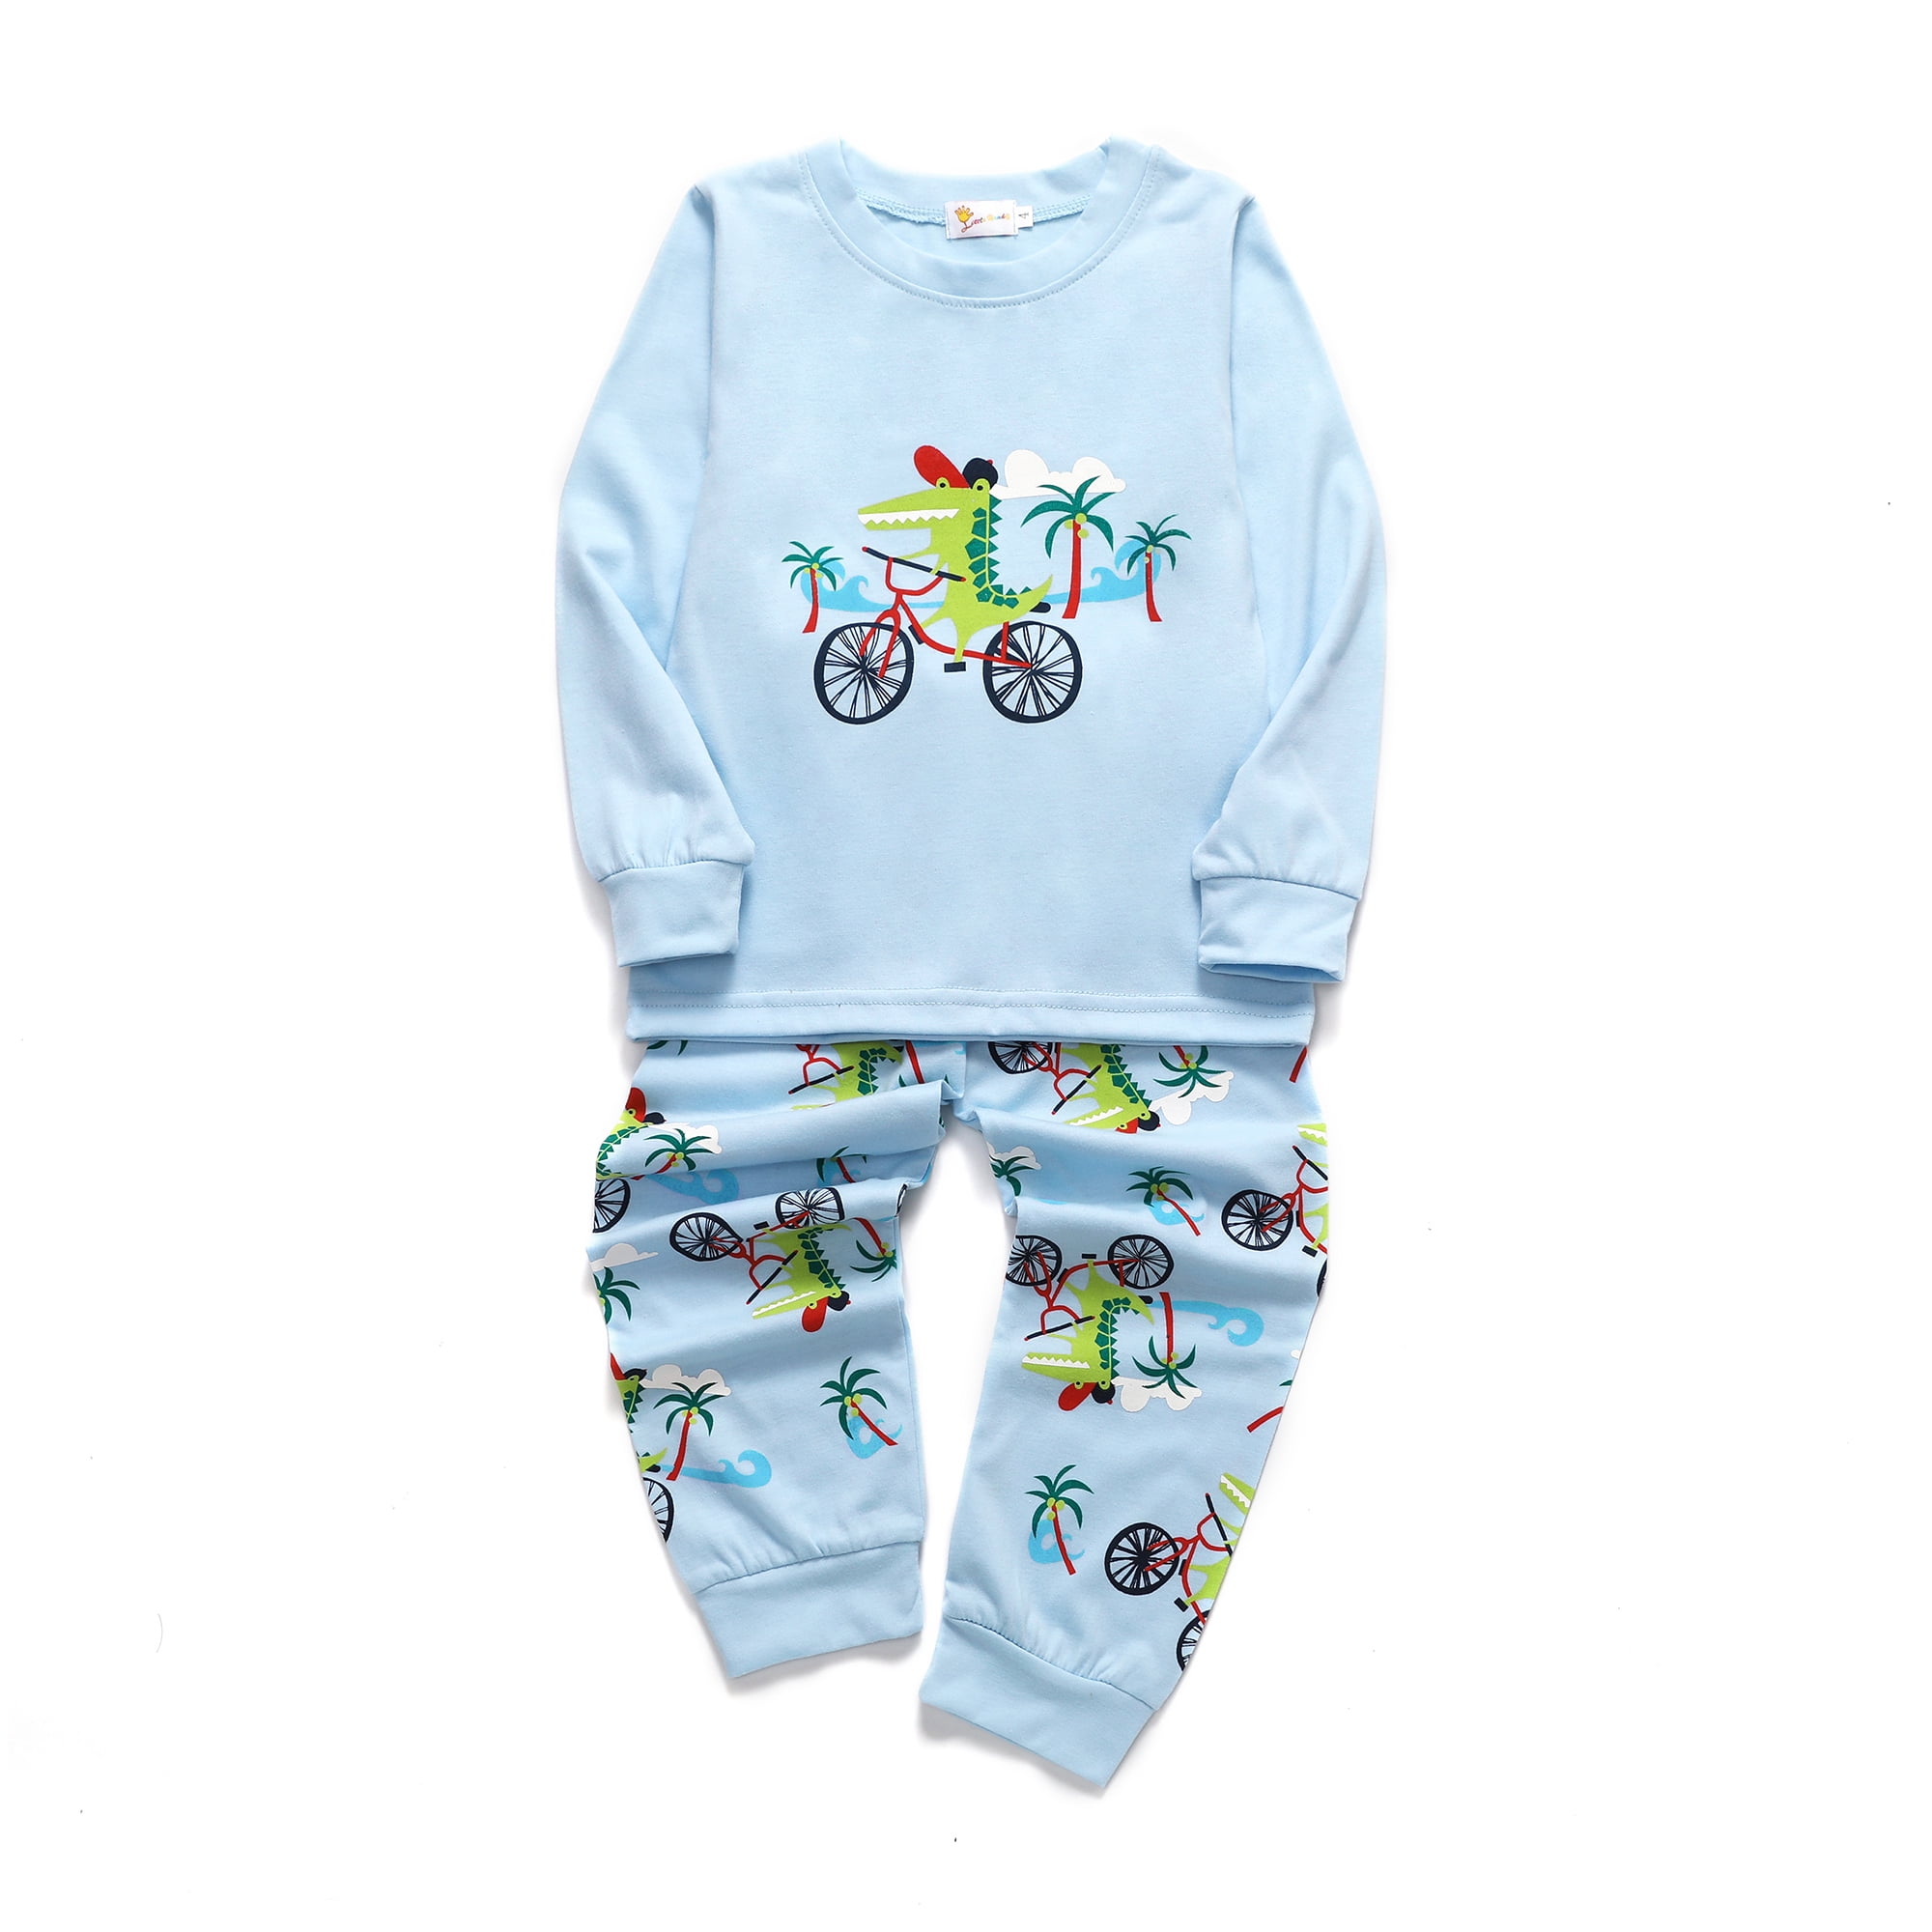 DDSOL Toddler Boys Pajamas 2 Piece Pajama Sleepwear Sets Fall Winter Long Sleeve Pjs Jammies 